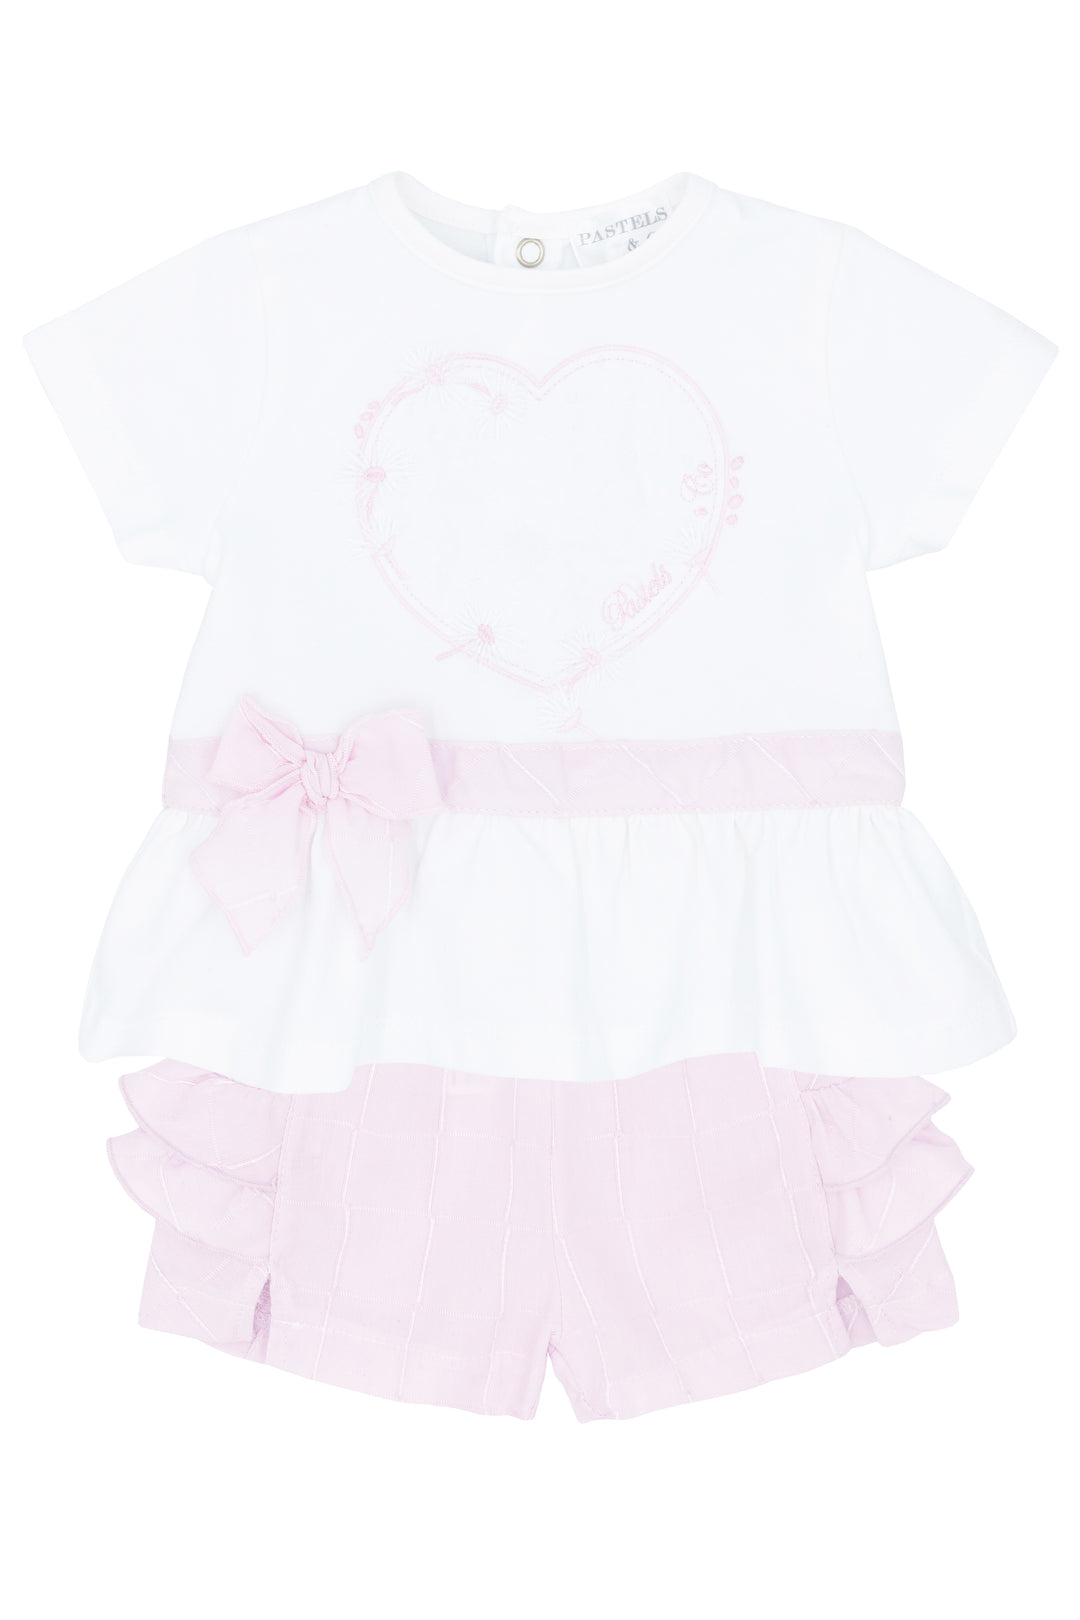 Pastels & Co "Caroline" White & Pink Blouse & Shorts | Millie and John